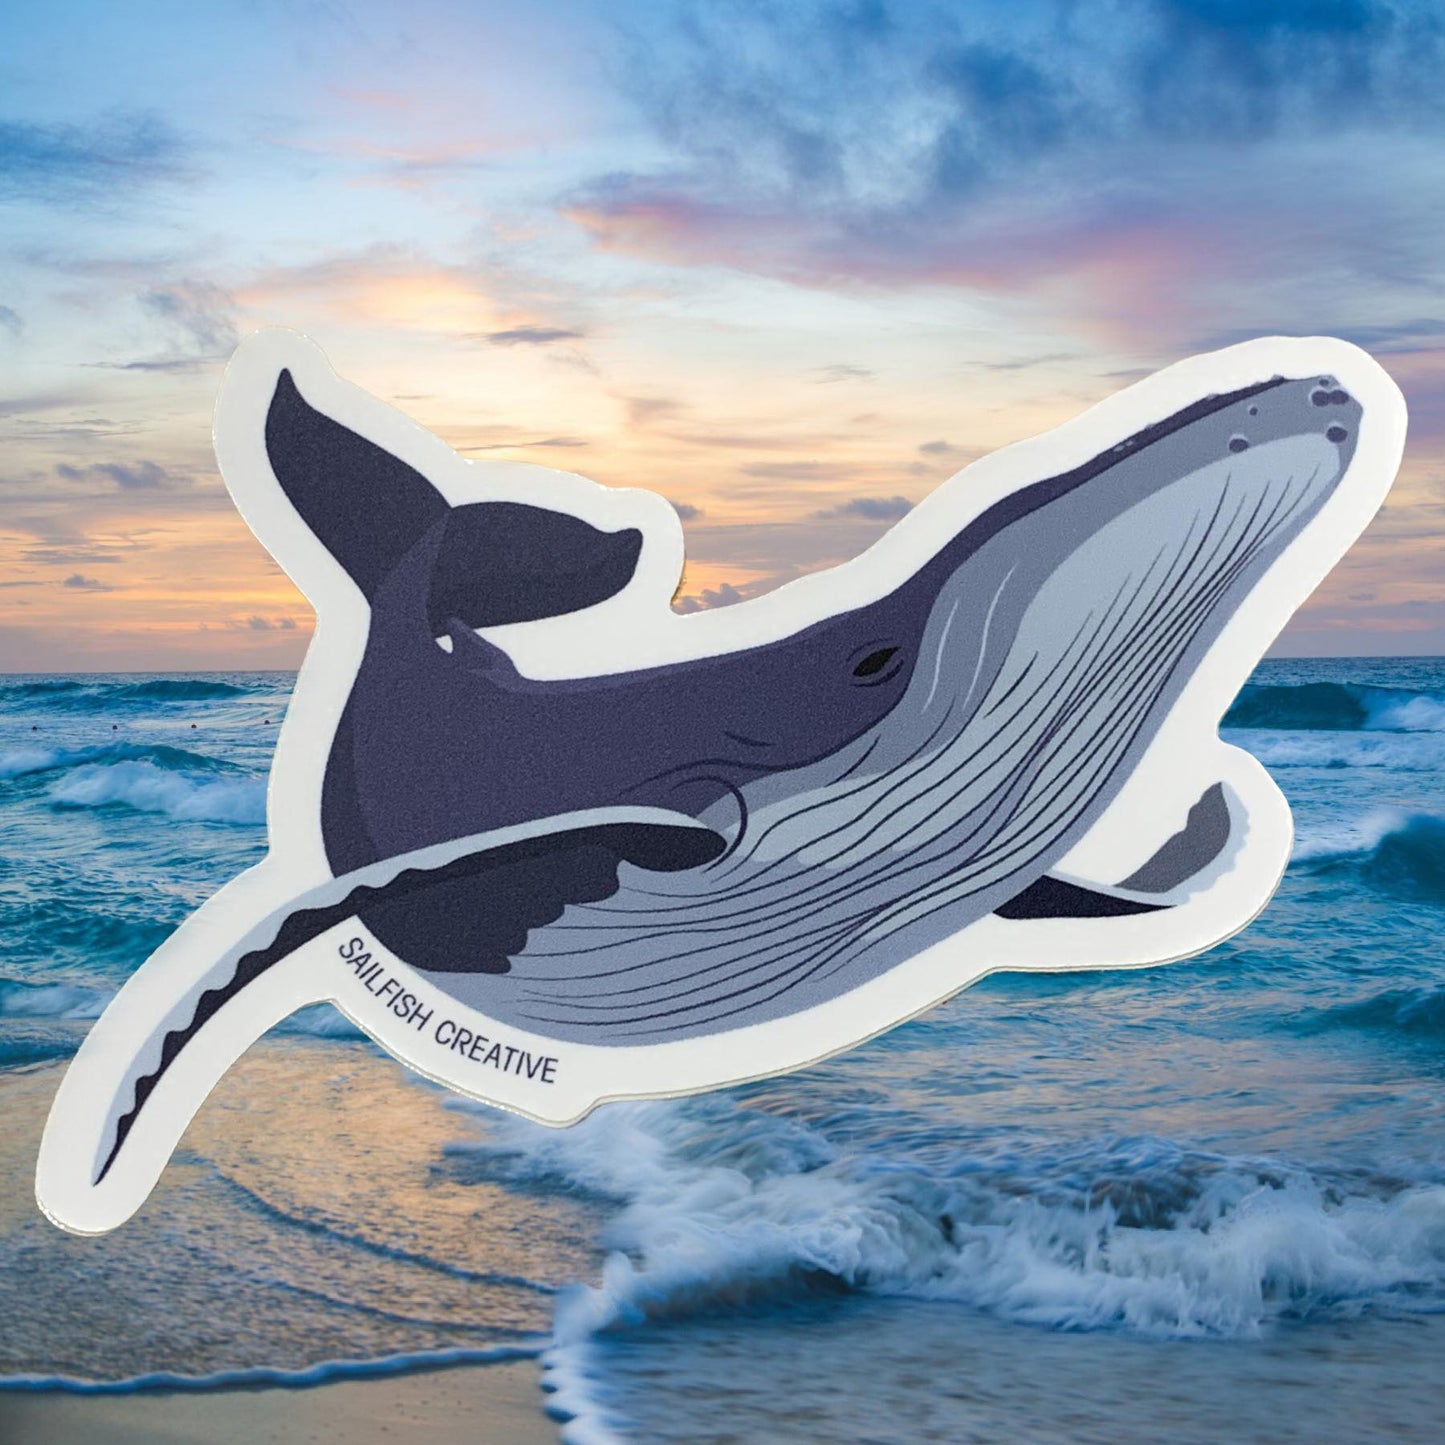 SAILFISH CREATIVE- "Humpback Whale" Vinyl Sticker